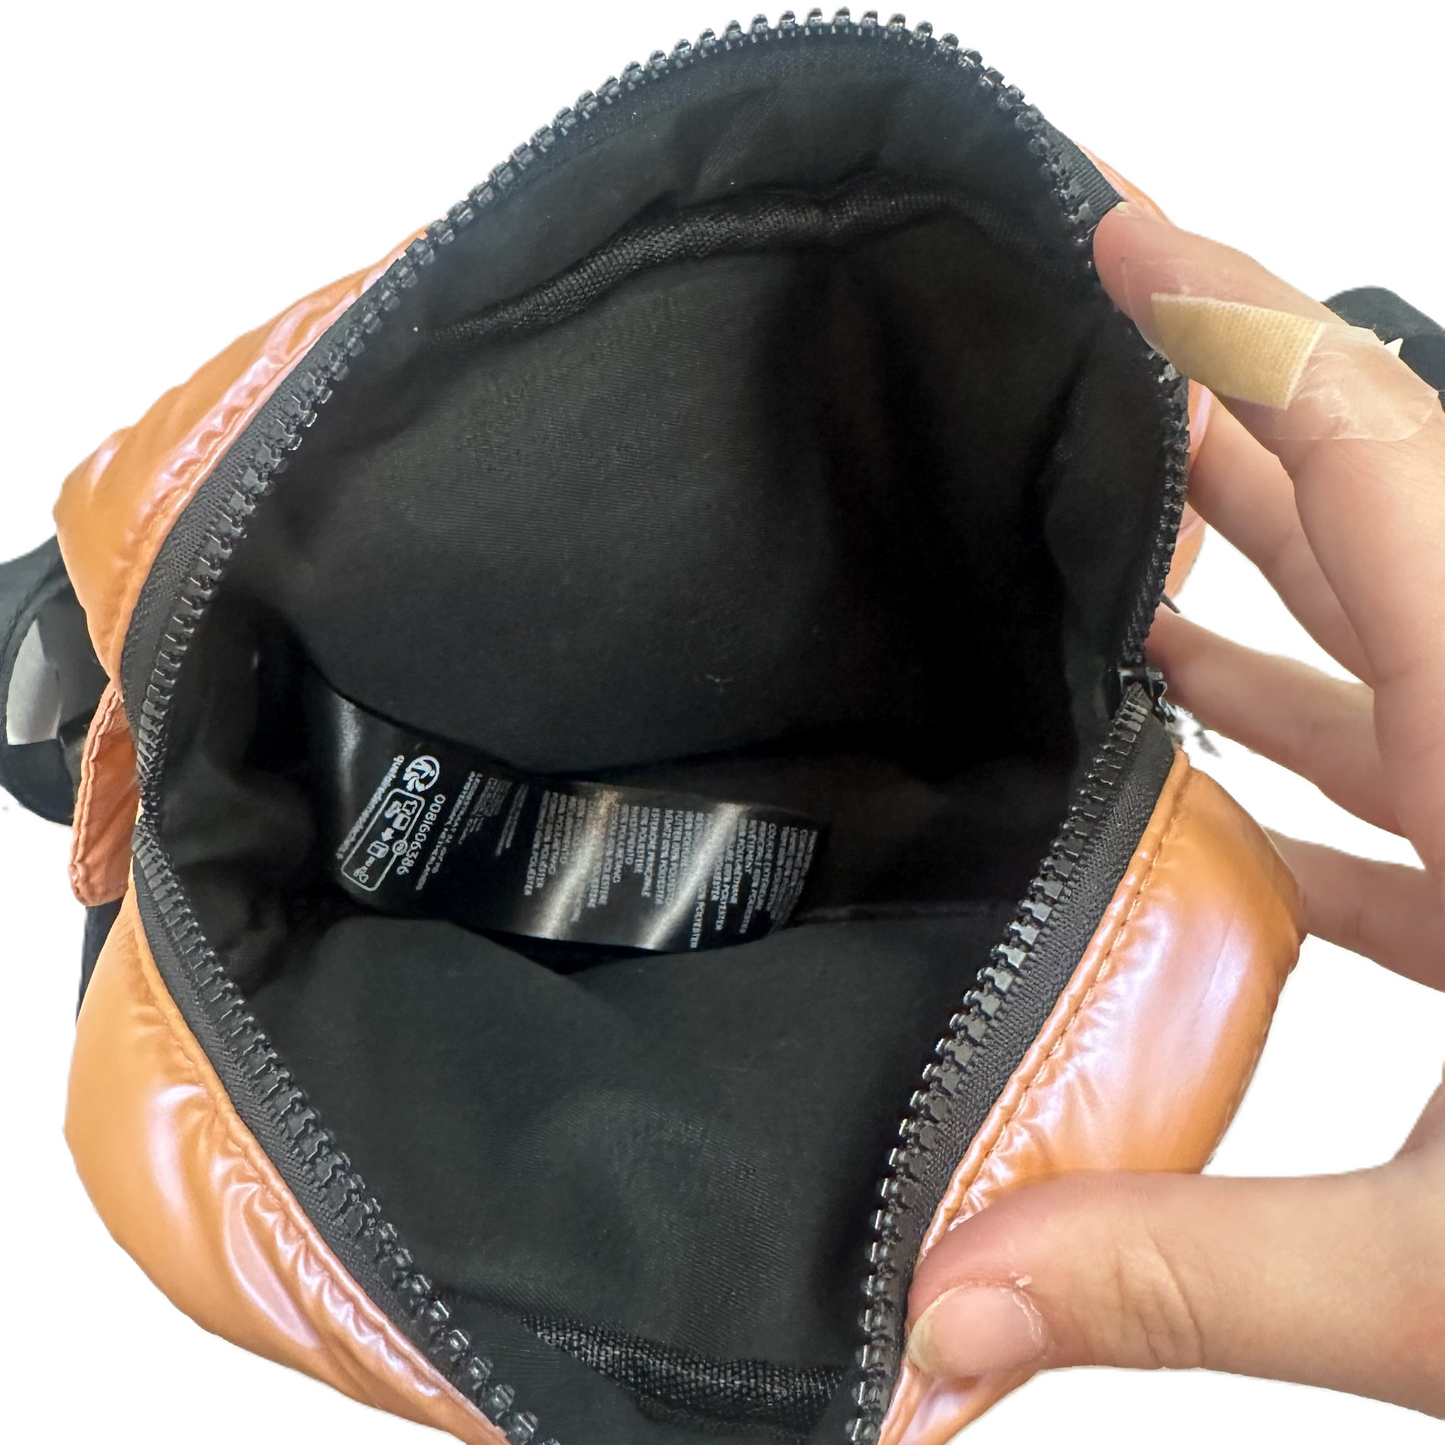 Belt Bag By Free People, Size: Medium